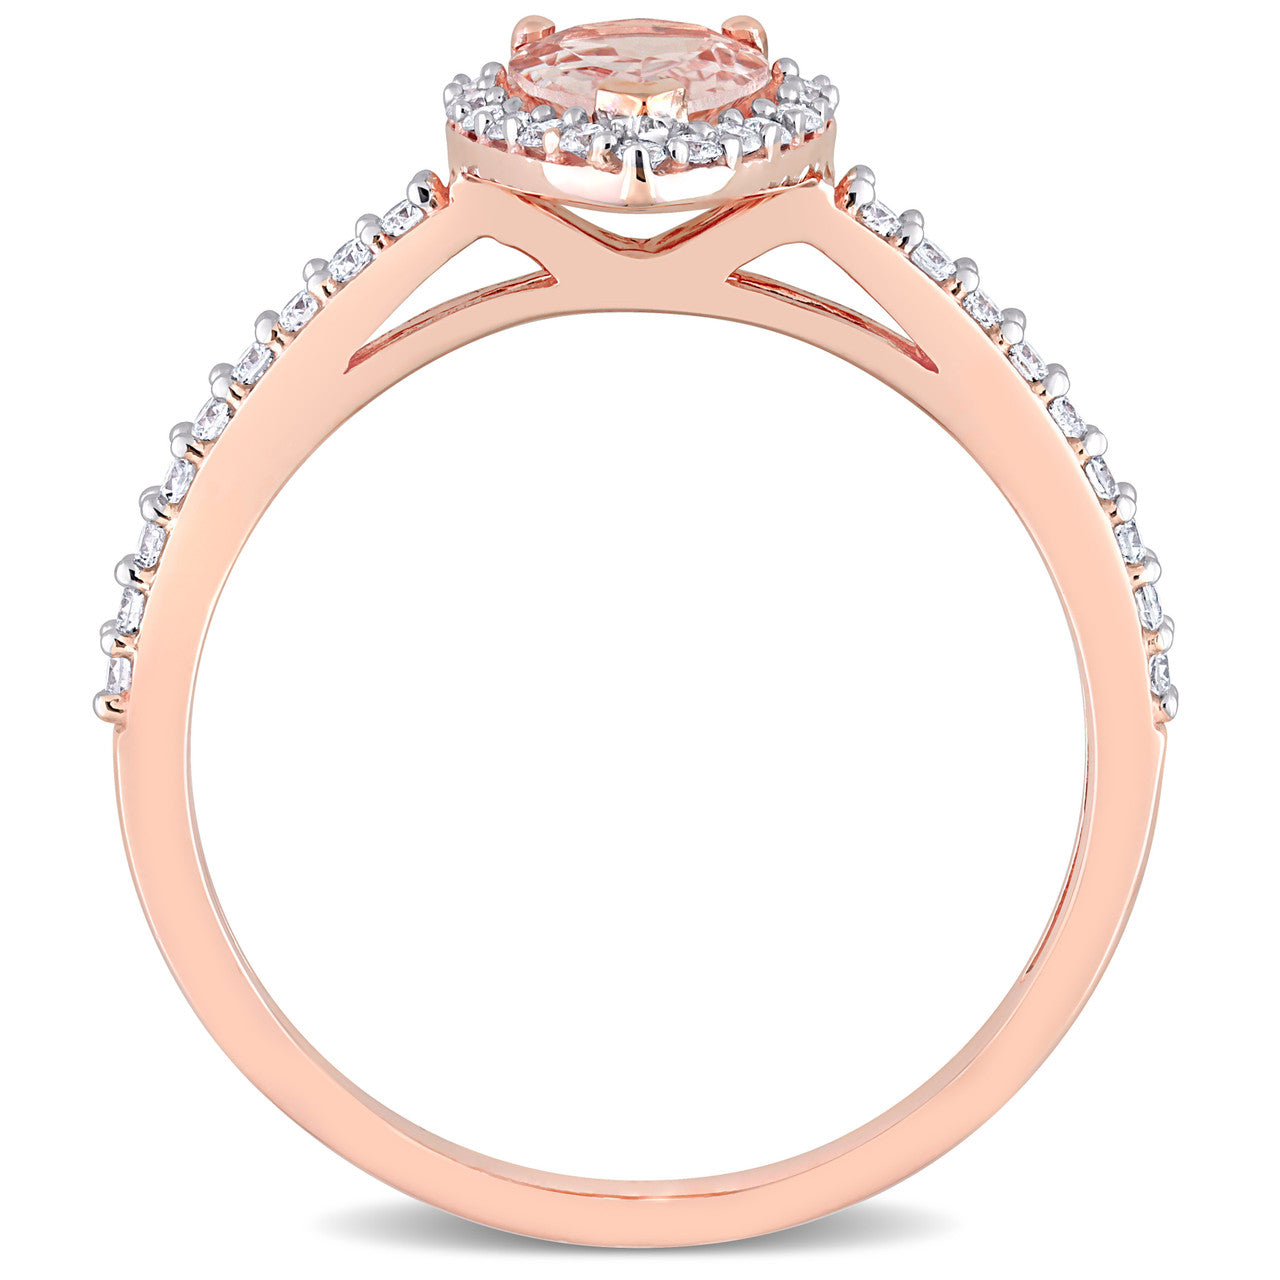 Ice Jewellery 1/4 CT TDW Diamond and 3/4 CT TGW Morganite Engagement Ring in 10k Pink Gold - 75000005427 | Ice Jewellery Australia